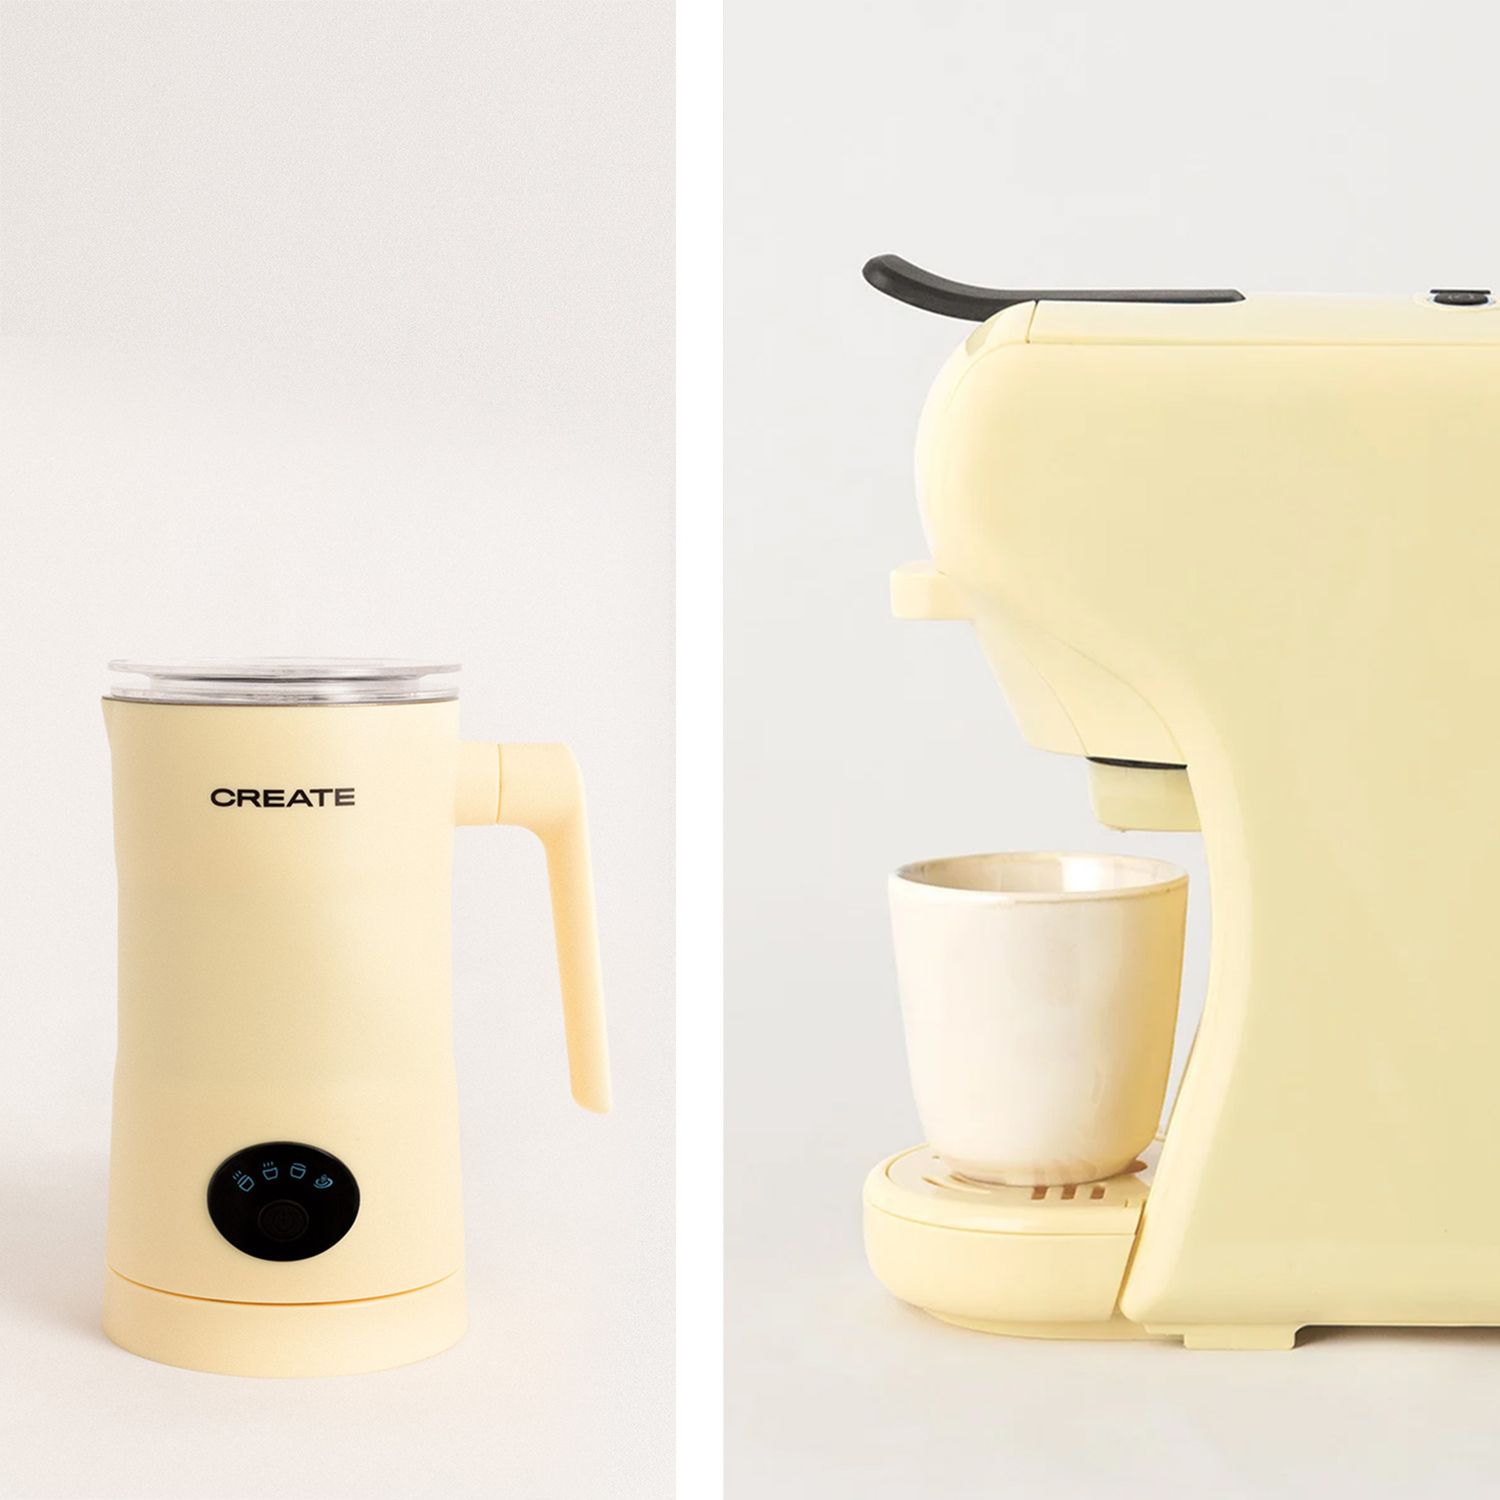 Create Cafetera Multicápsula Express y café molido - Potts stylance